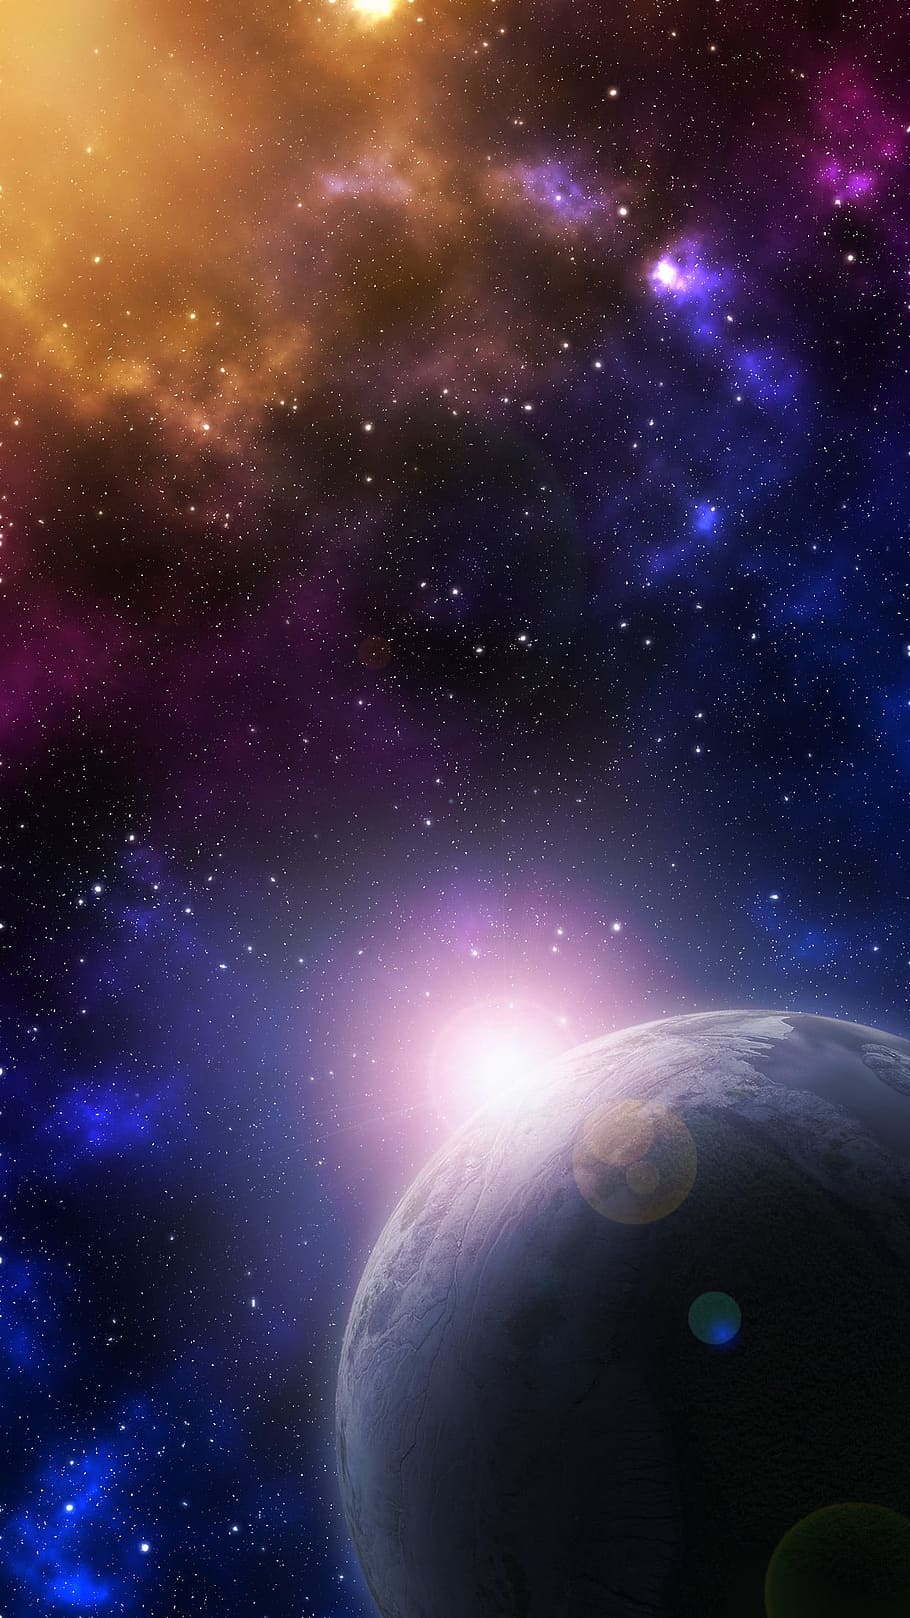 nebula galaxy illustration, universe, planet, star, background, space, cosmos, celestial body, galaxy, fantasy